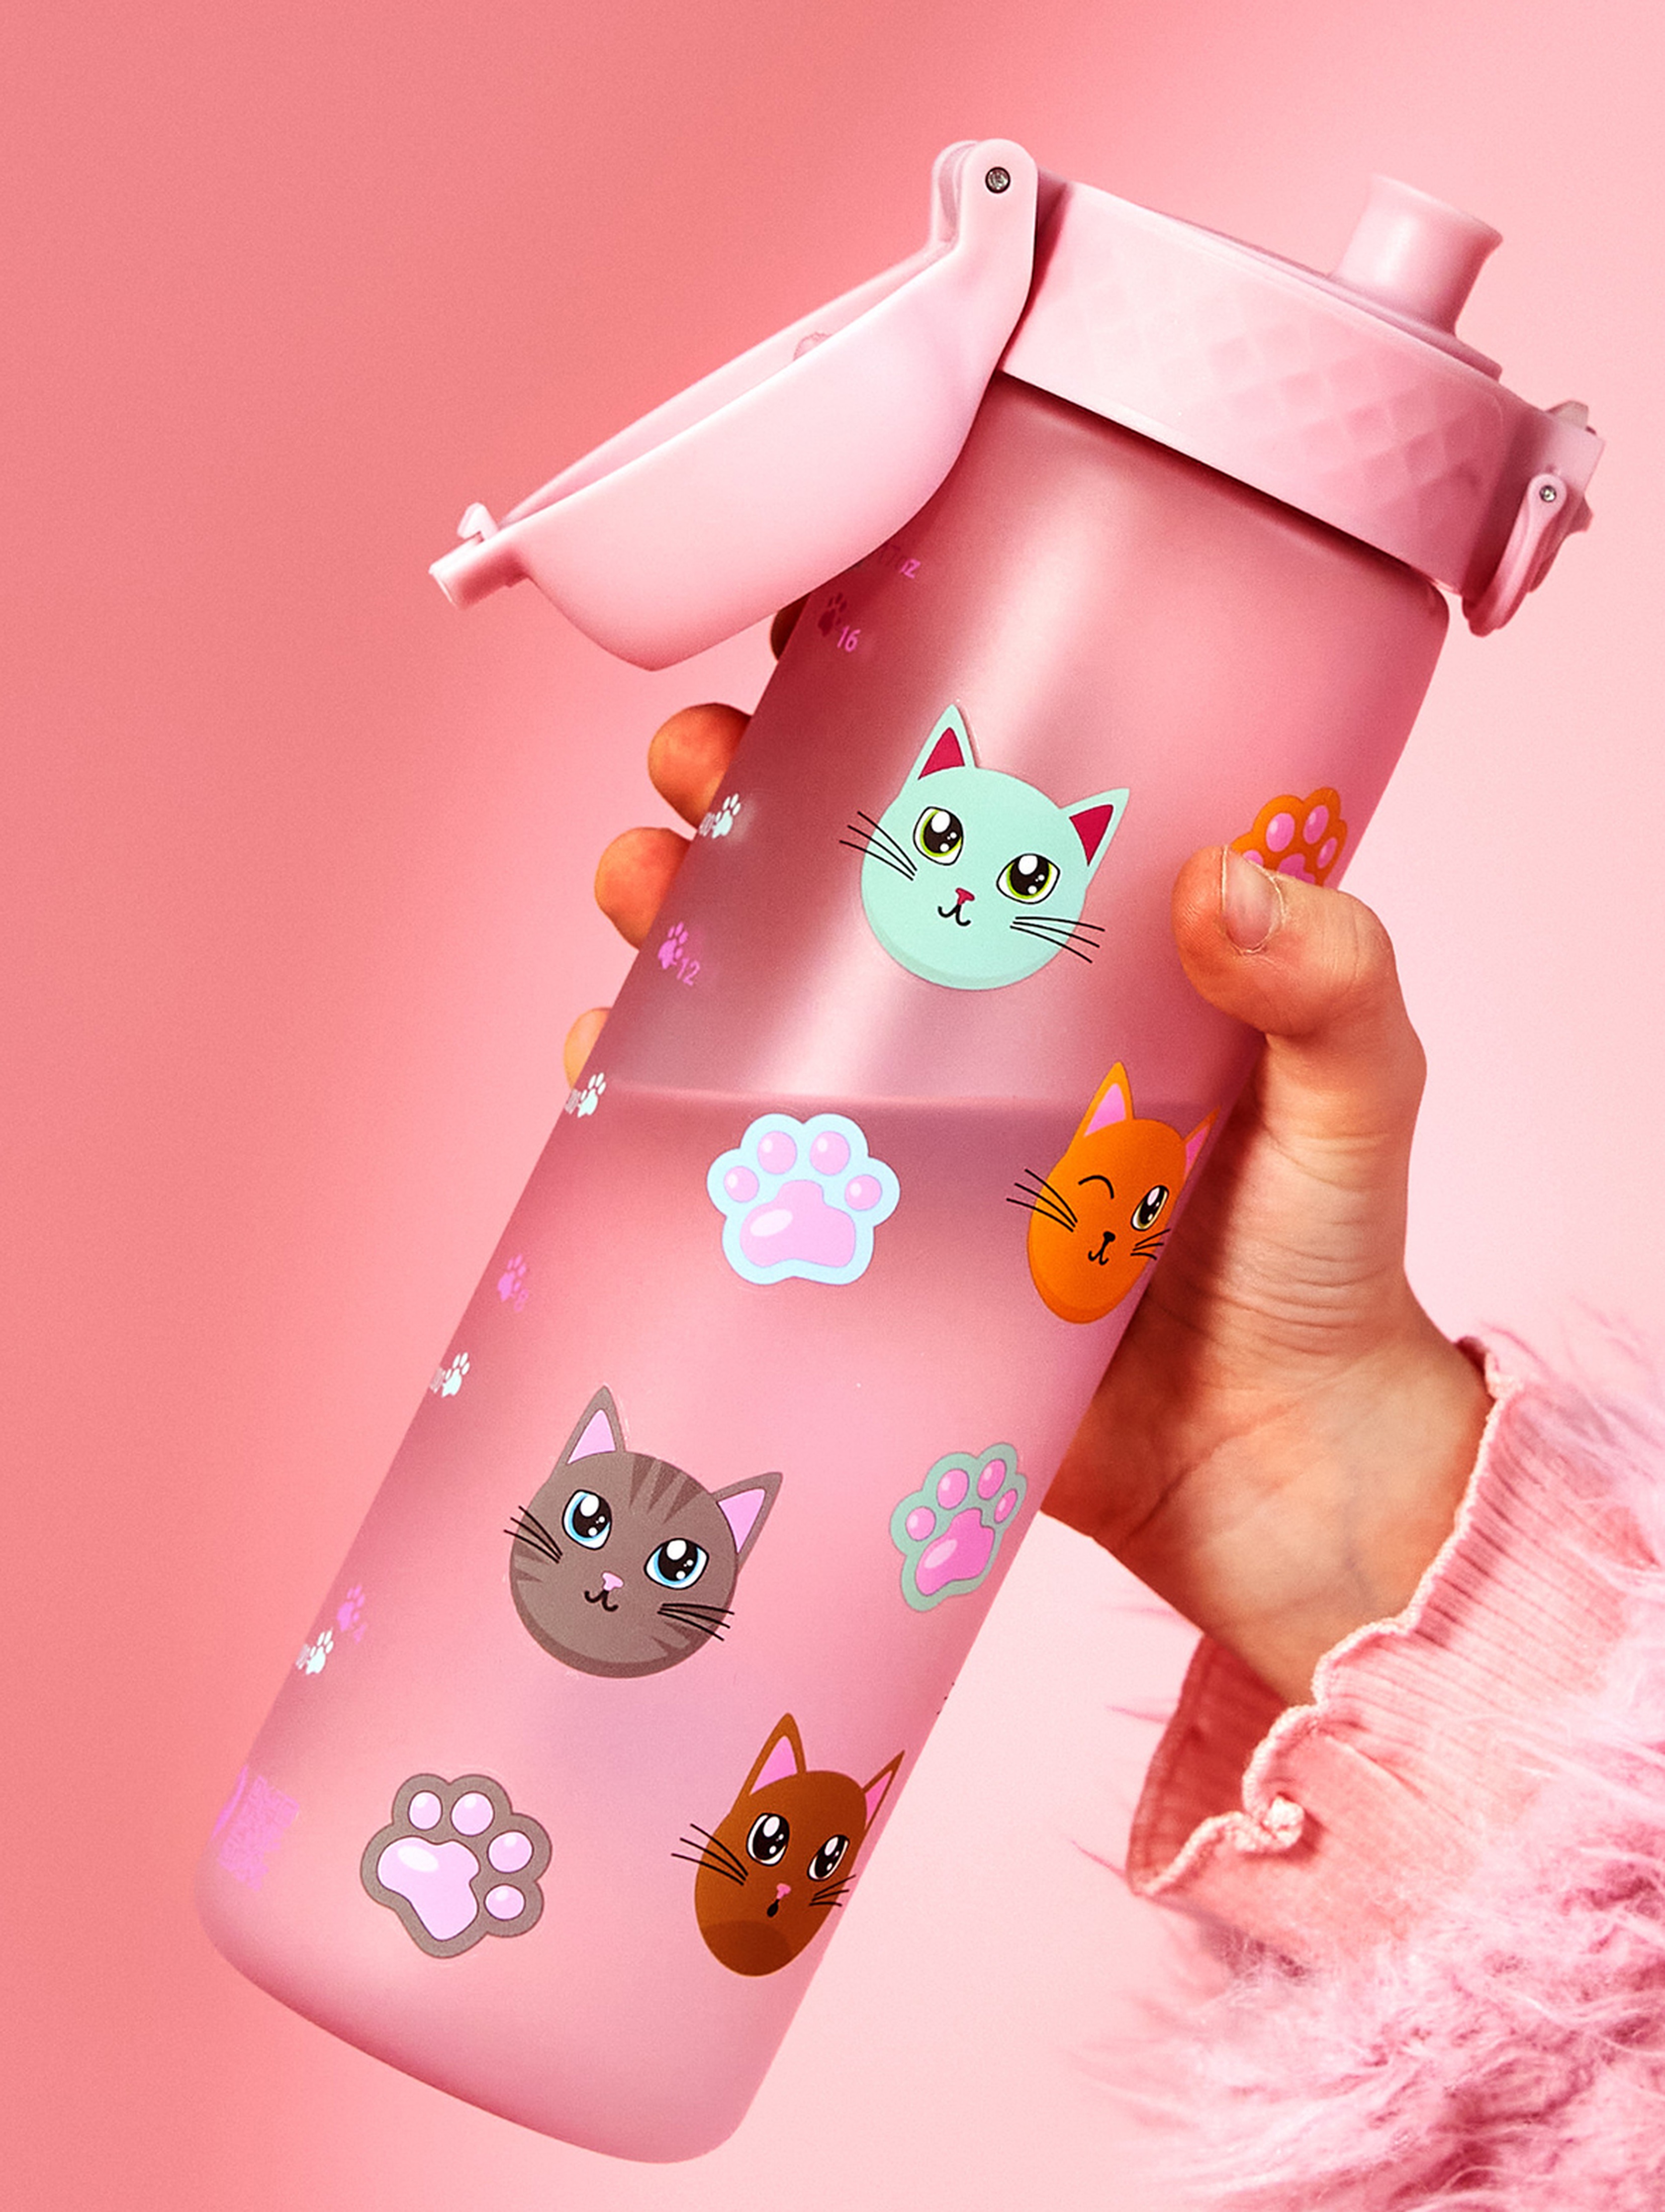 Butelka na wodę ION8 BPA Free Cats 500ml różowa